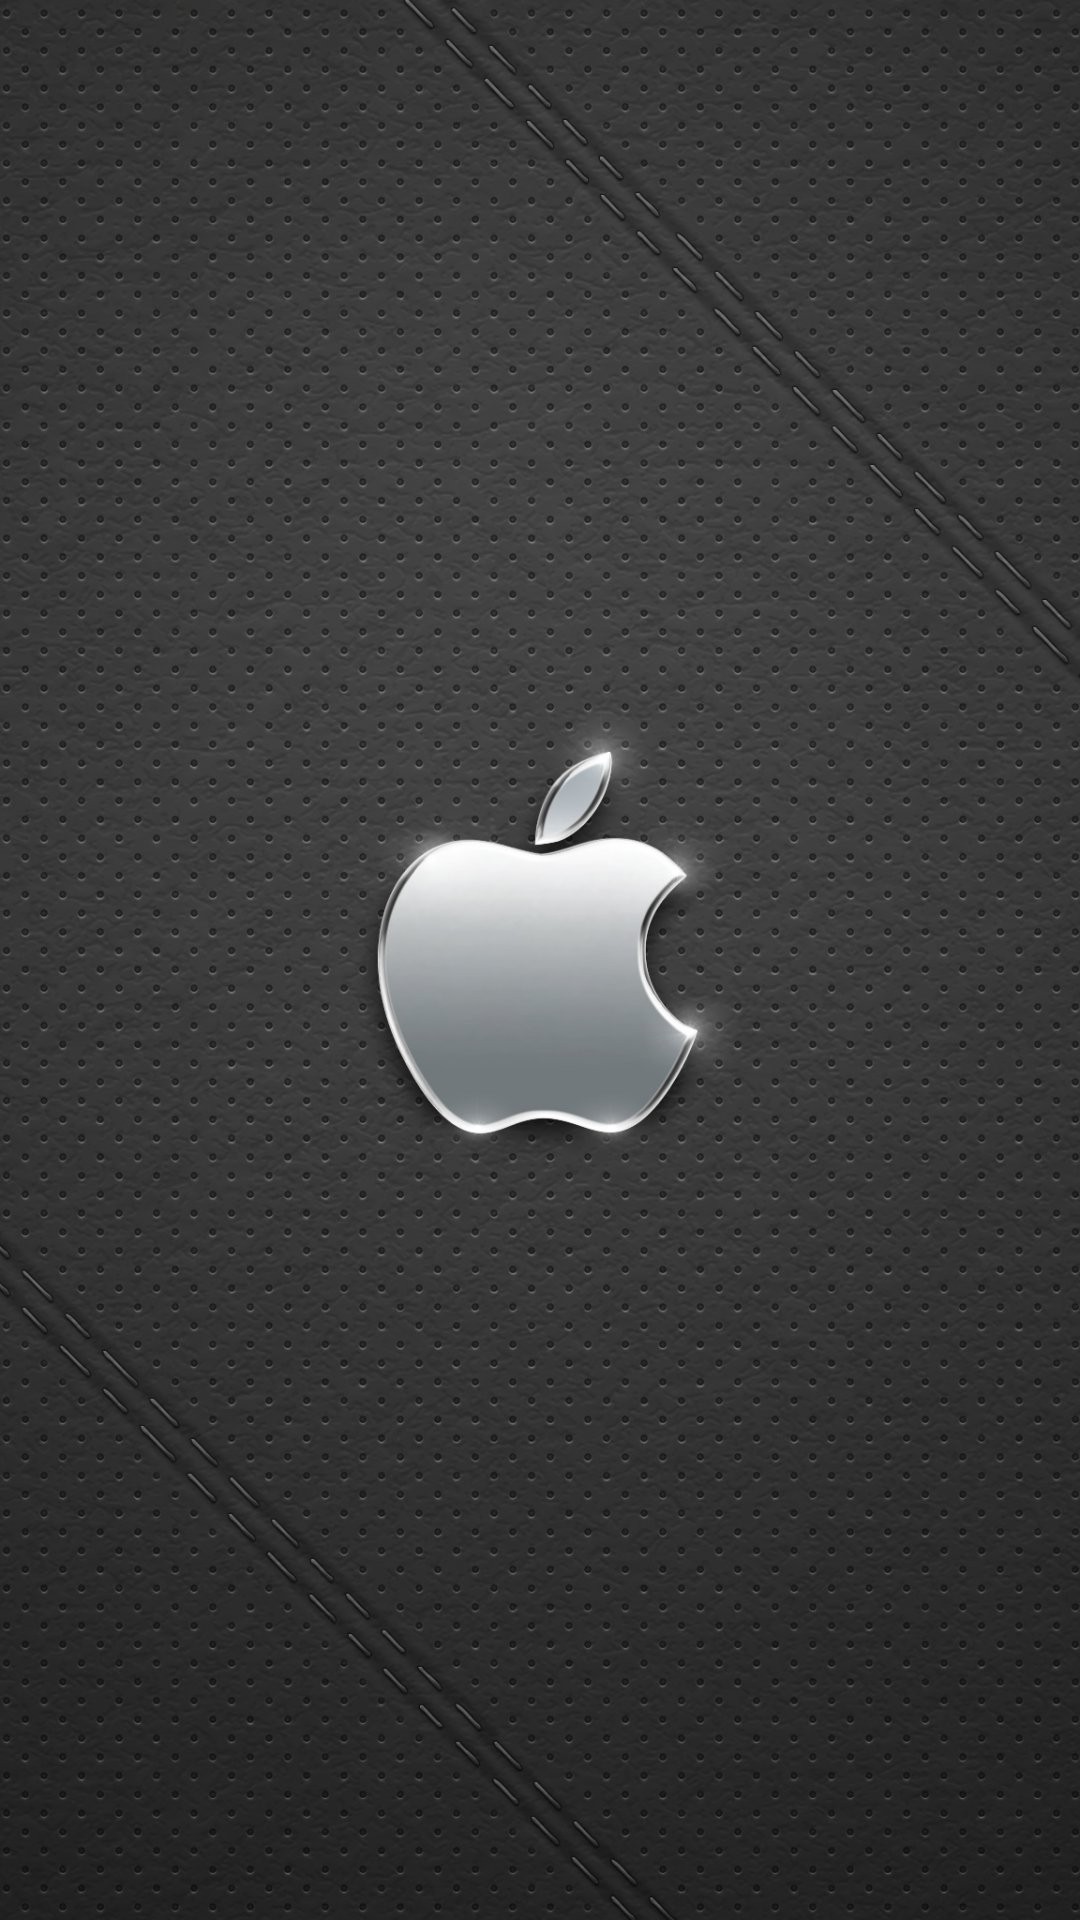 iPad iPhone 6 Plus Wallpapers 12297   Logos iPhone 6 Plus Wallpapers 1080x1920